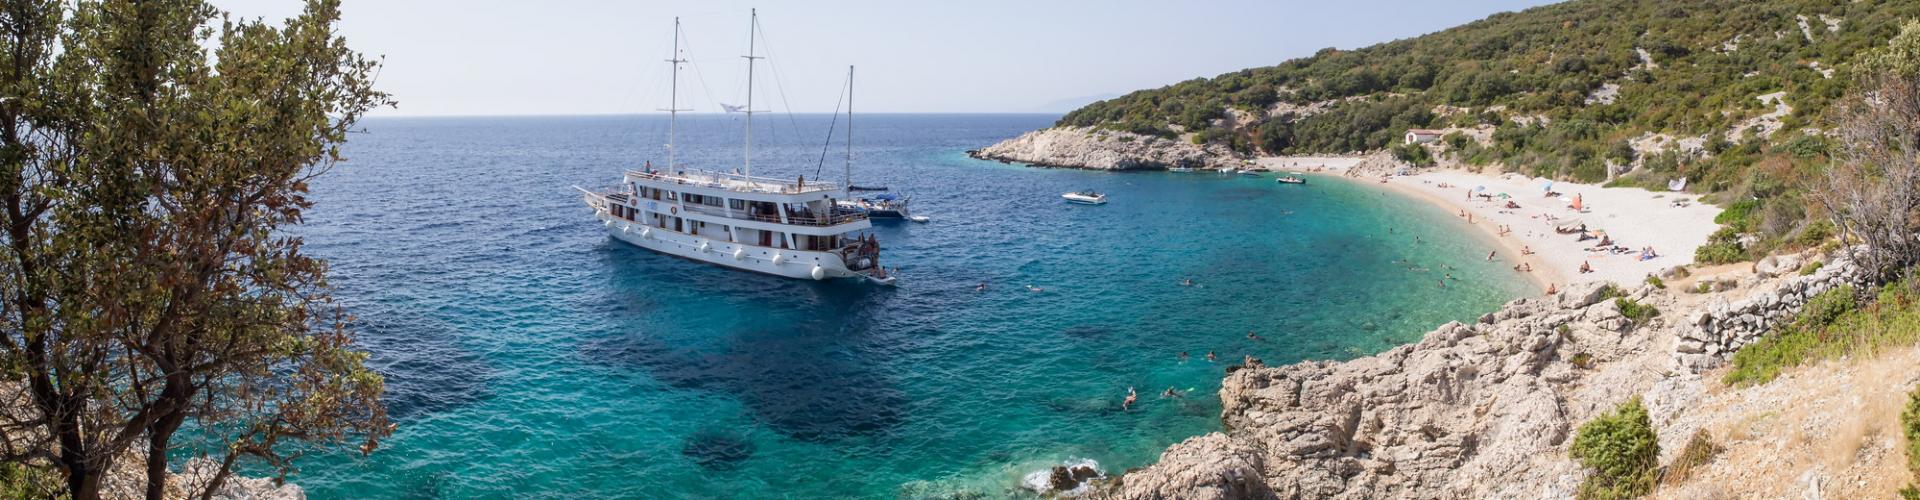 2011. Premium krydstogtskib MV Dalmatia